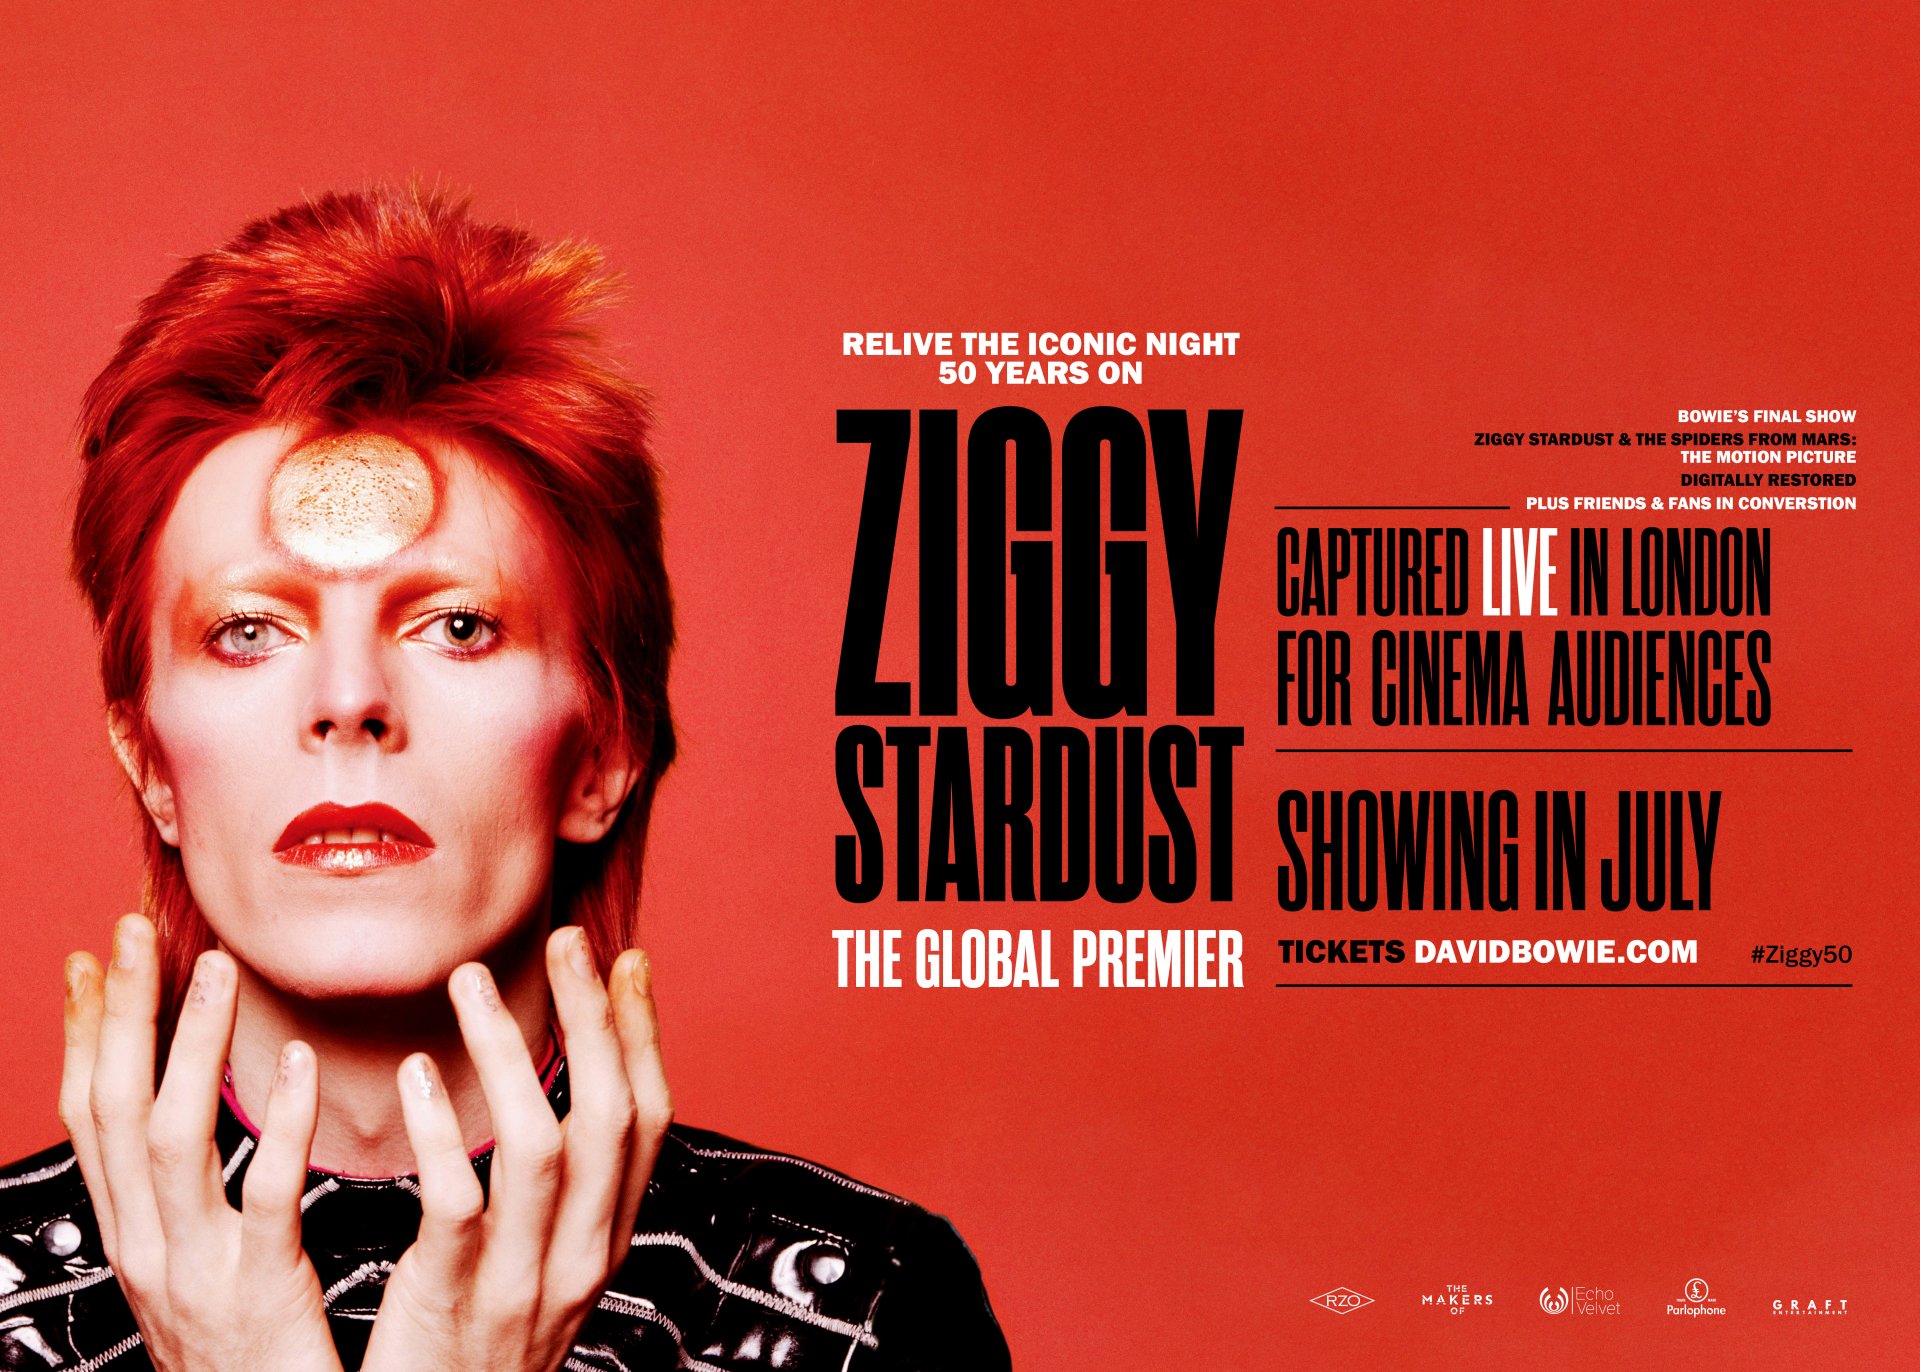 David Bowie Ziggy Stardust The Global Premiere 1863